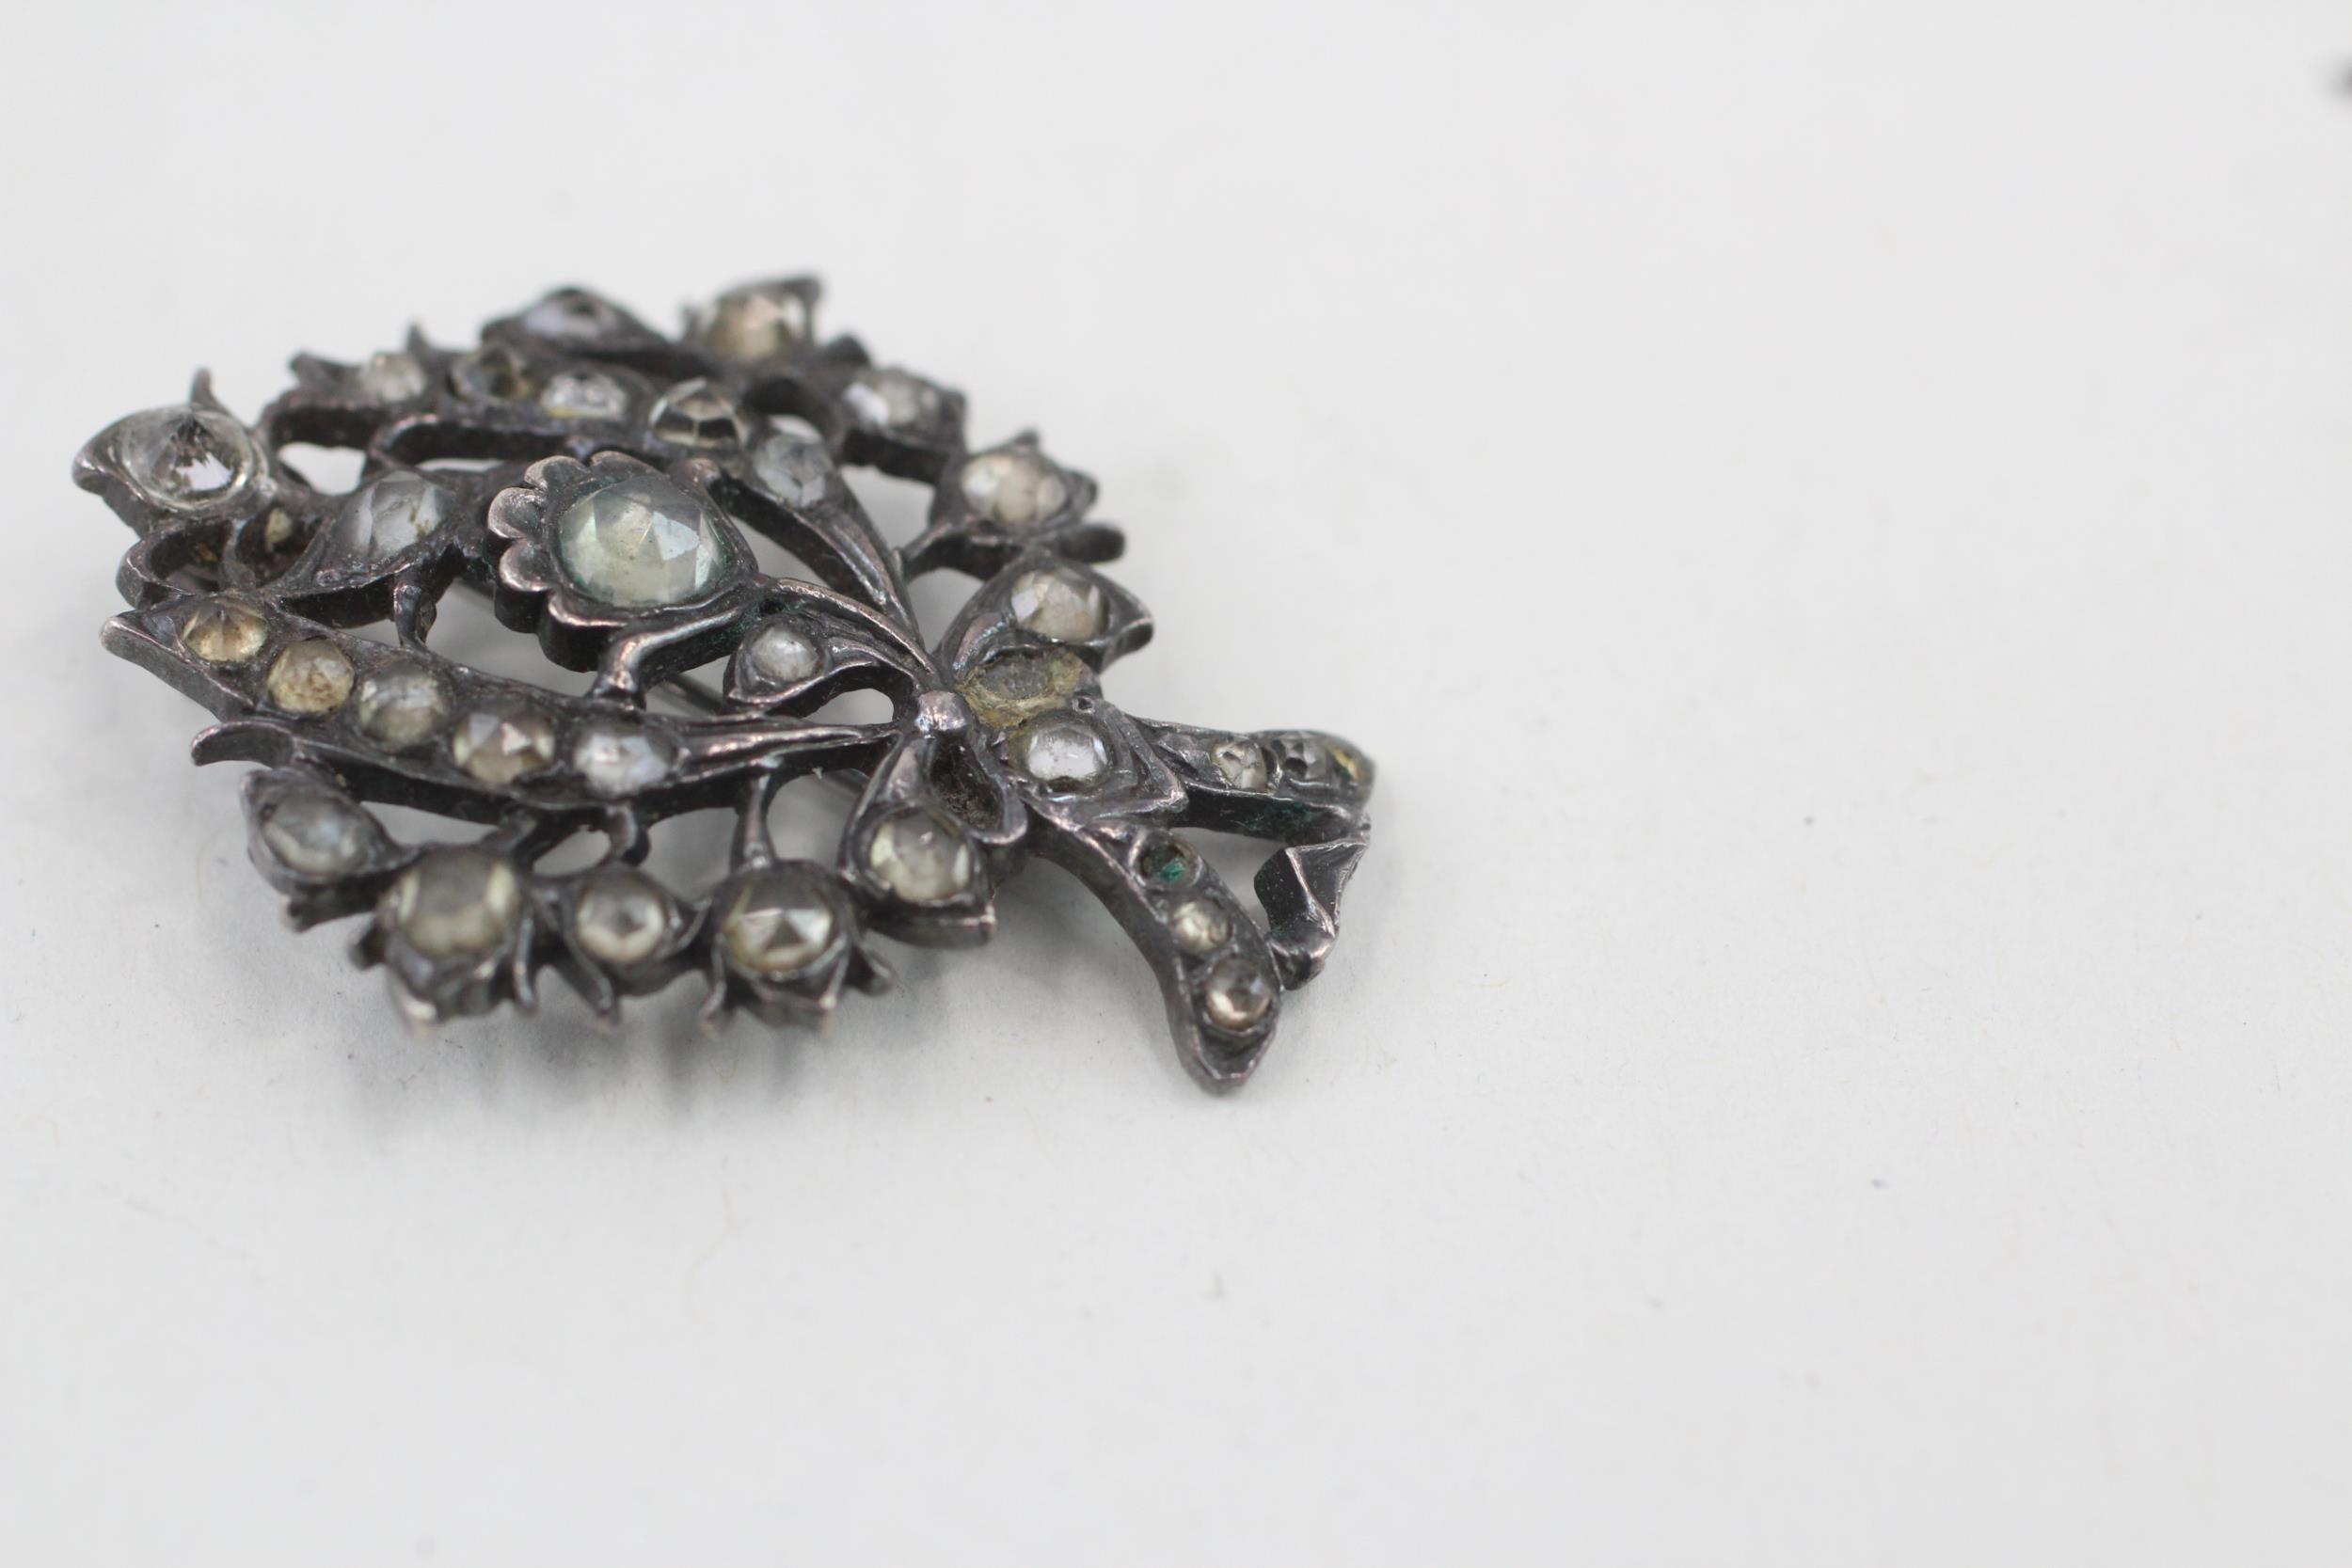 Silver 19th century Iberian old cut gemstone brooch (7g) - Image 3 of 8